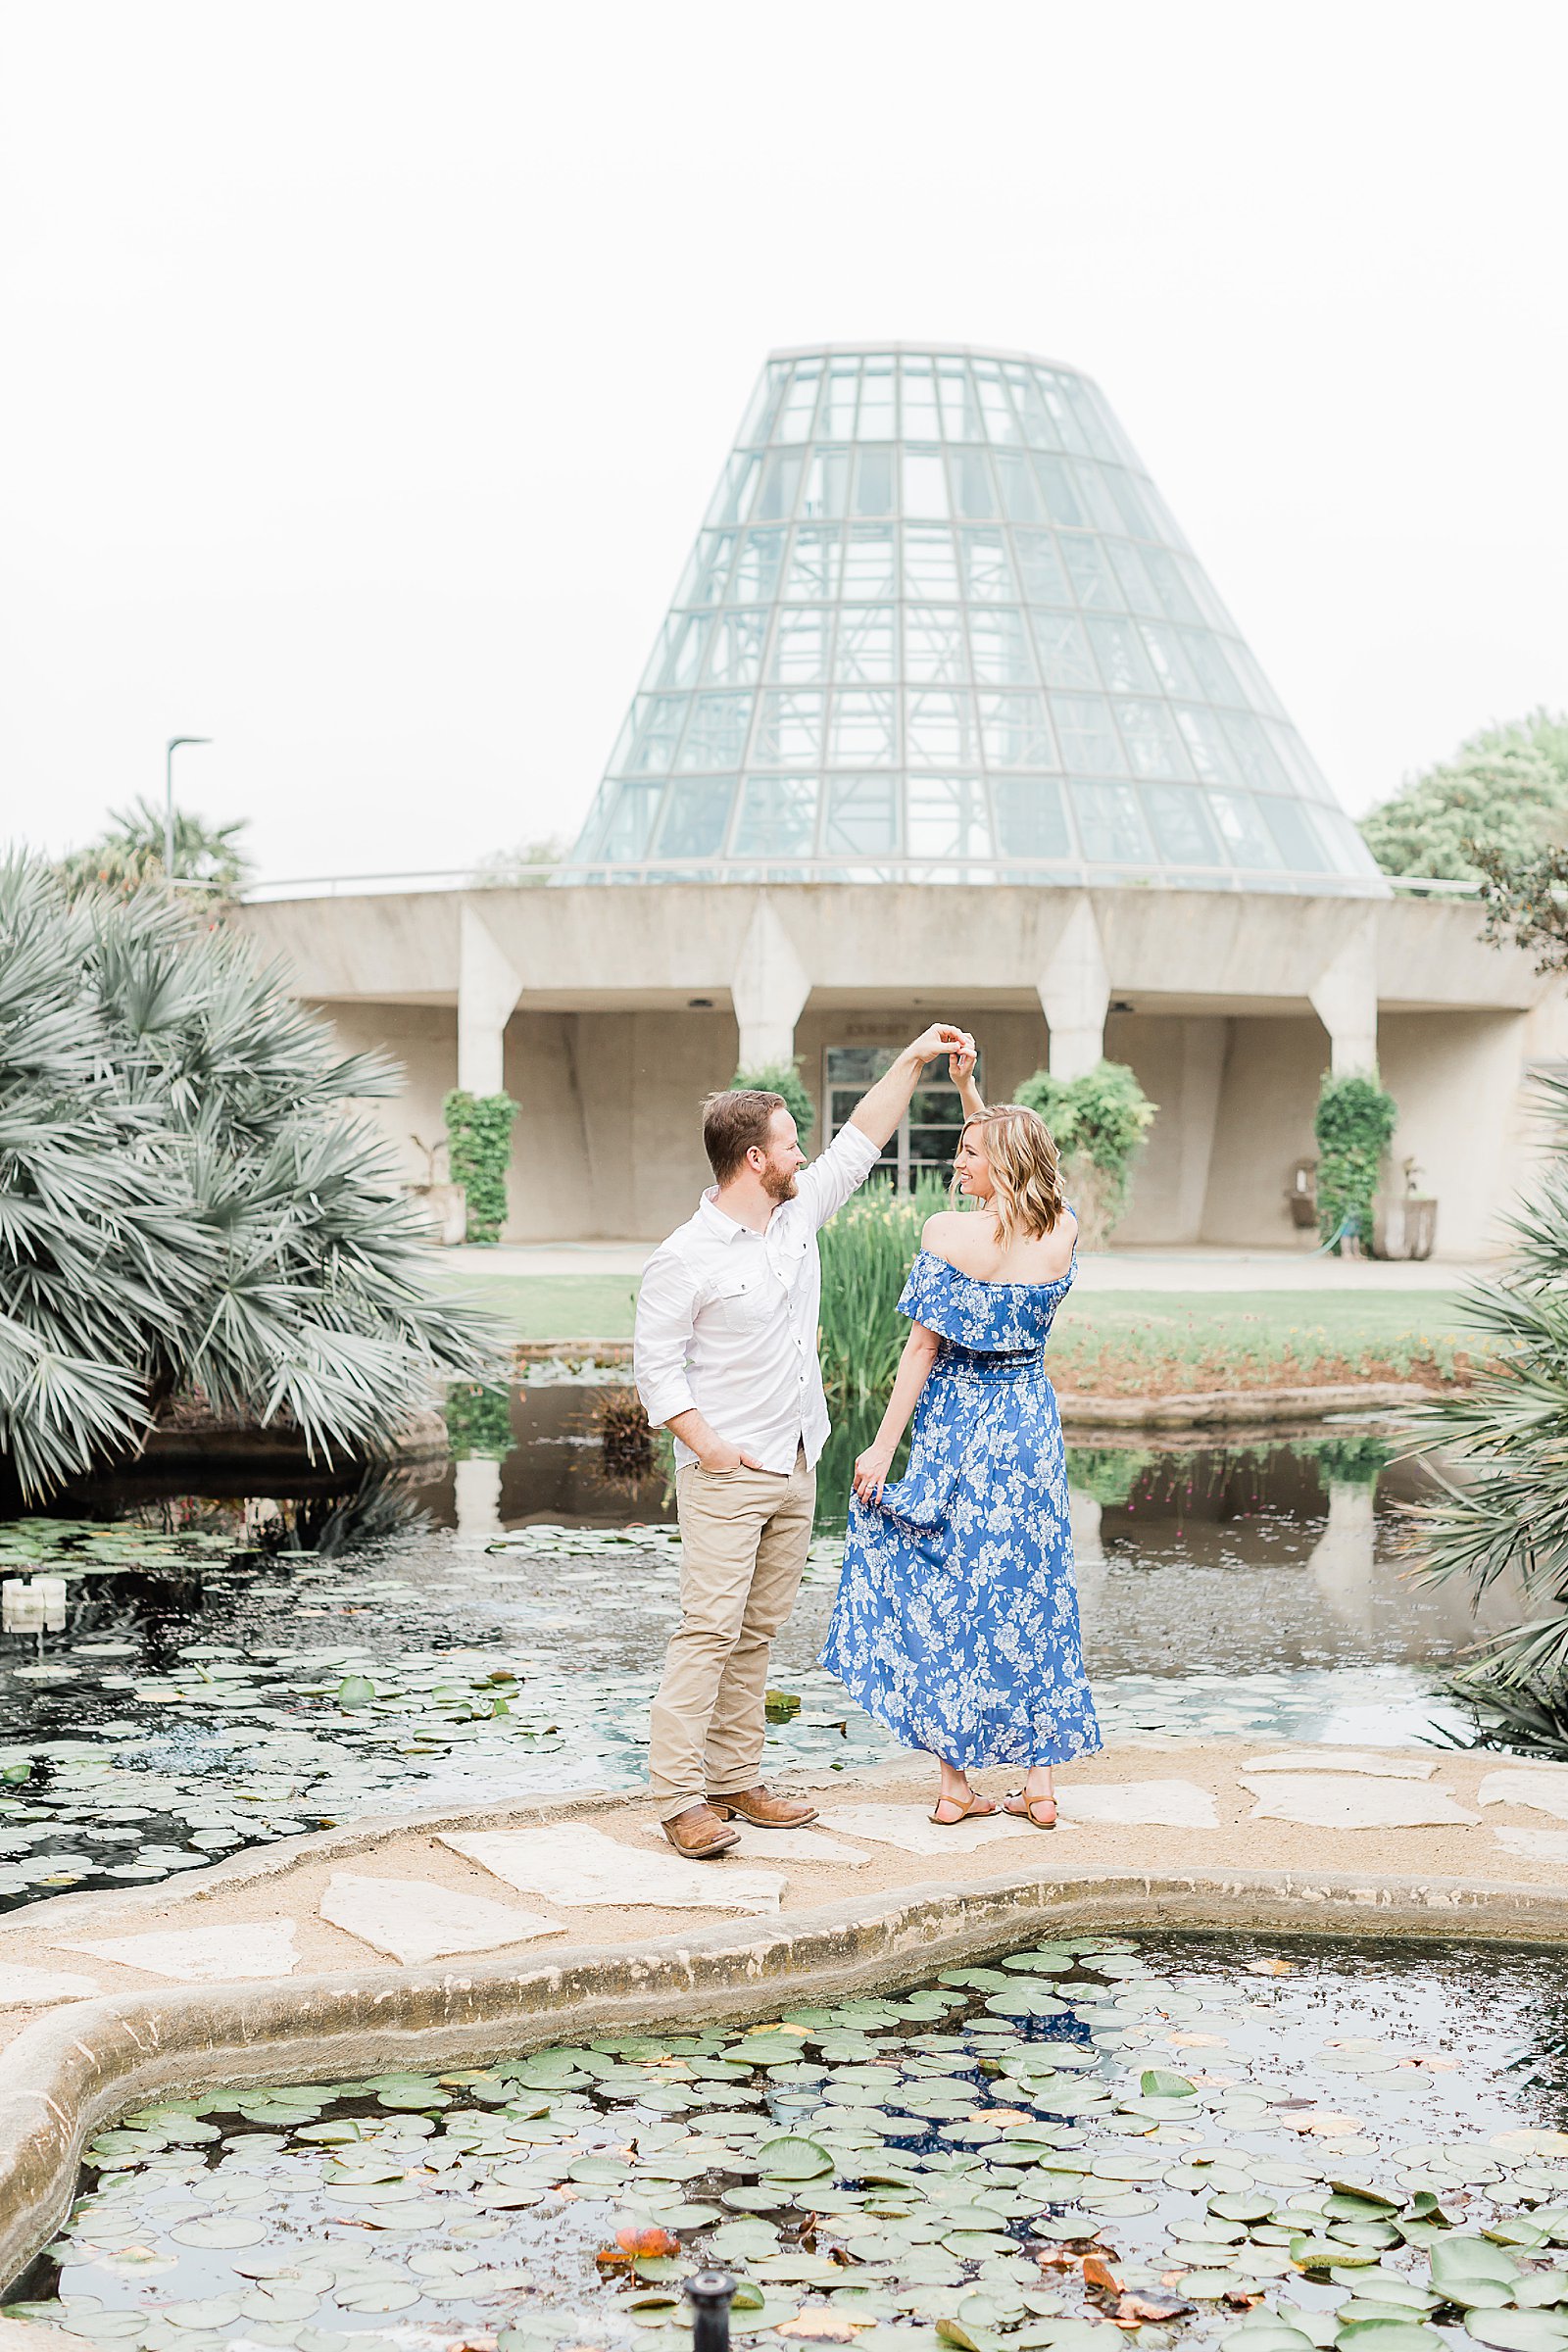 Engagement Session at Botanical Gardens, Anna Kay Photography, Wedding Photographer